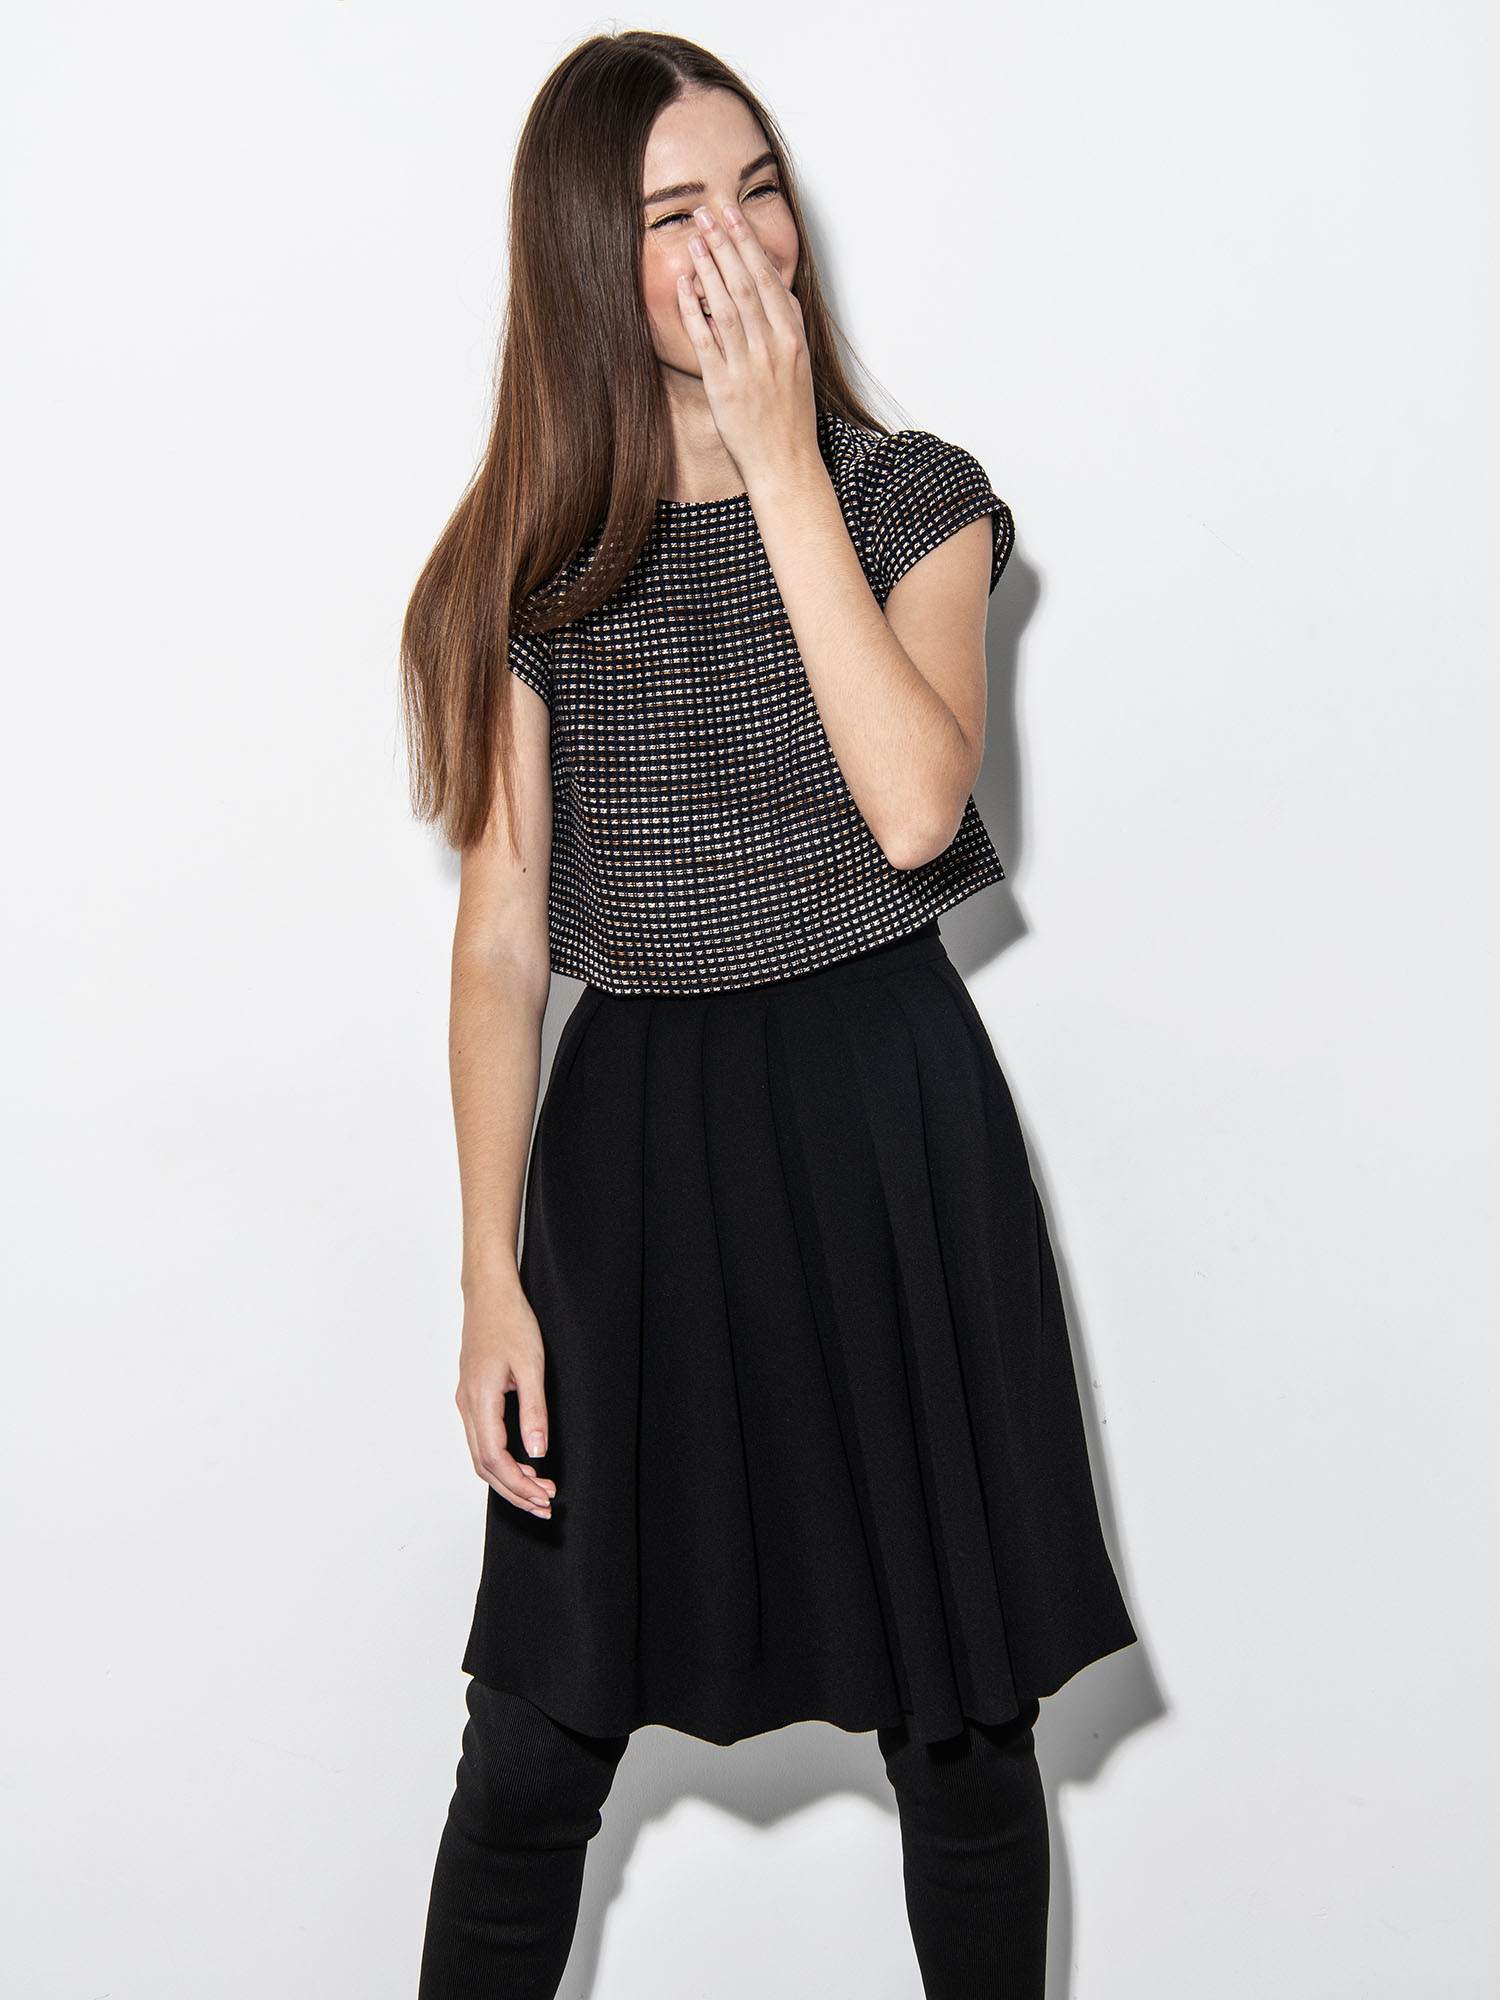 Black pleated skirt lauching • Sassa Björg